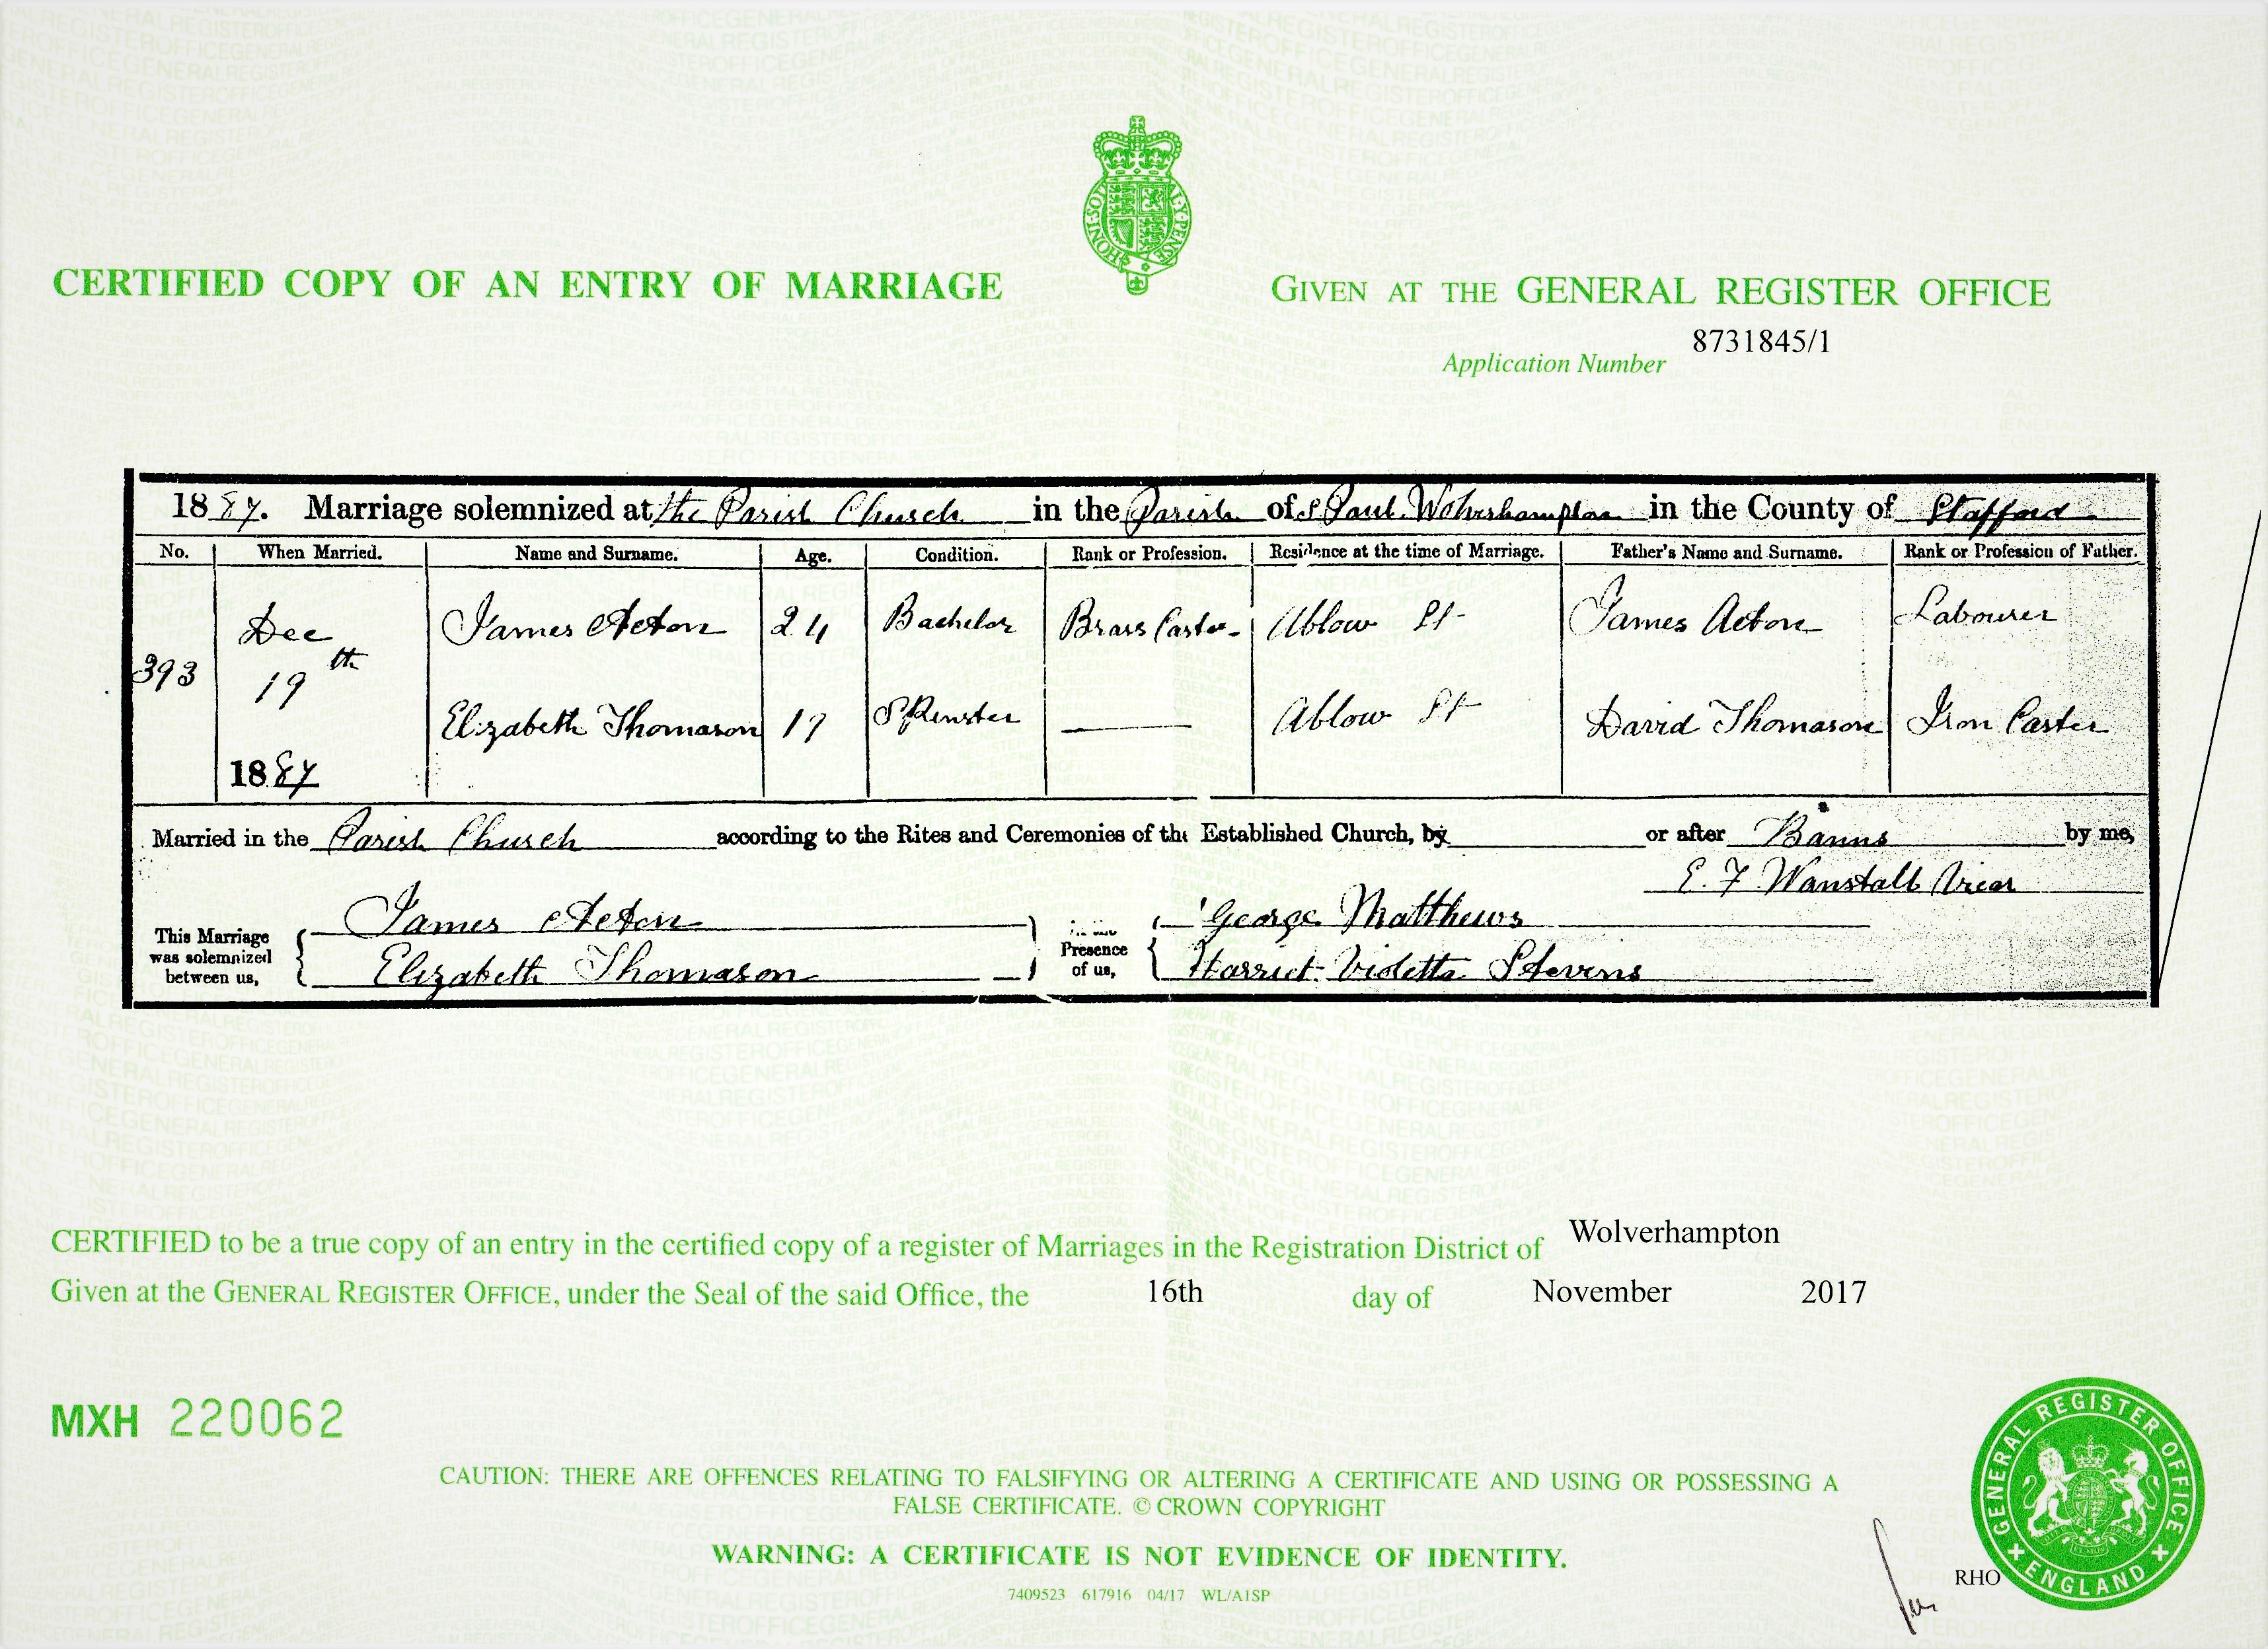 ACTON James & THOMASON Elizabeth - Marriage Certificate(1).jpg